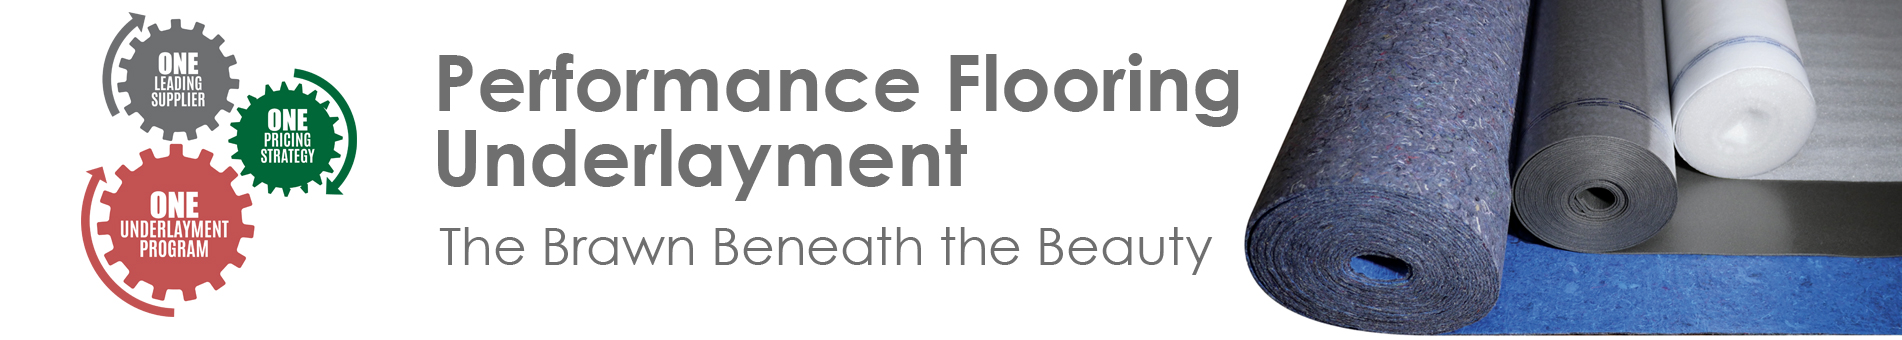 Performance Flooring Underlayment